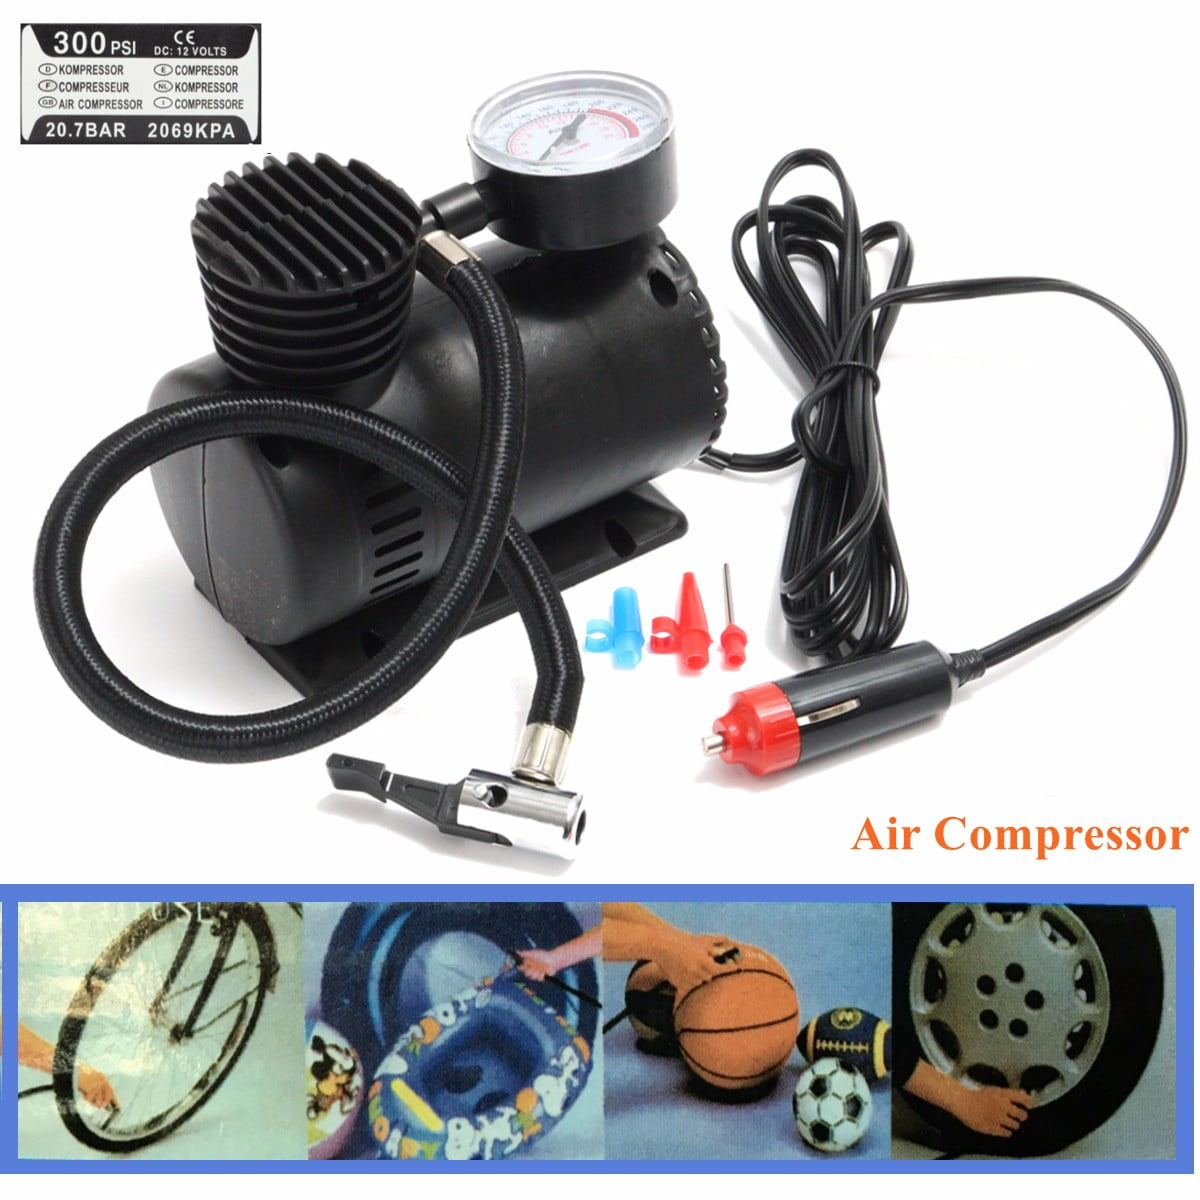 Details about   Electric Auto Car Tire Inflator Air Pump Compressor Portable 12V DC 150-300 PSI 